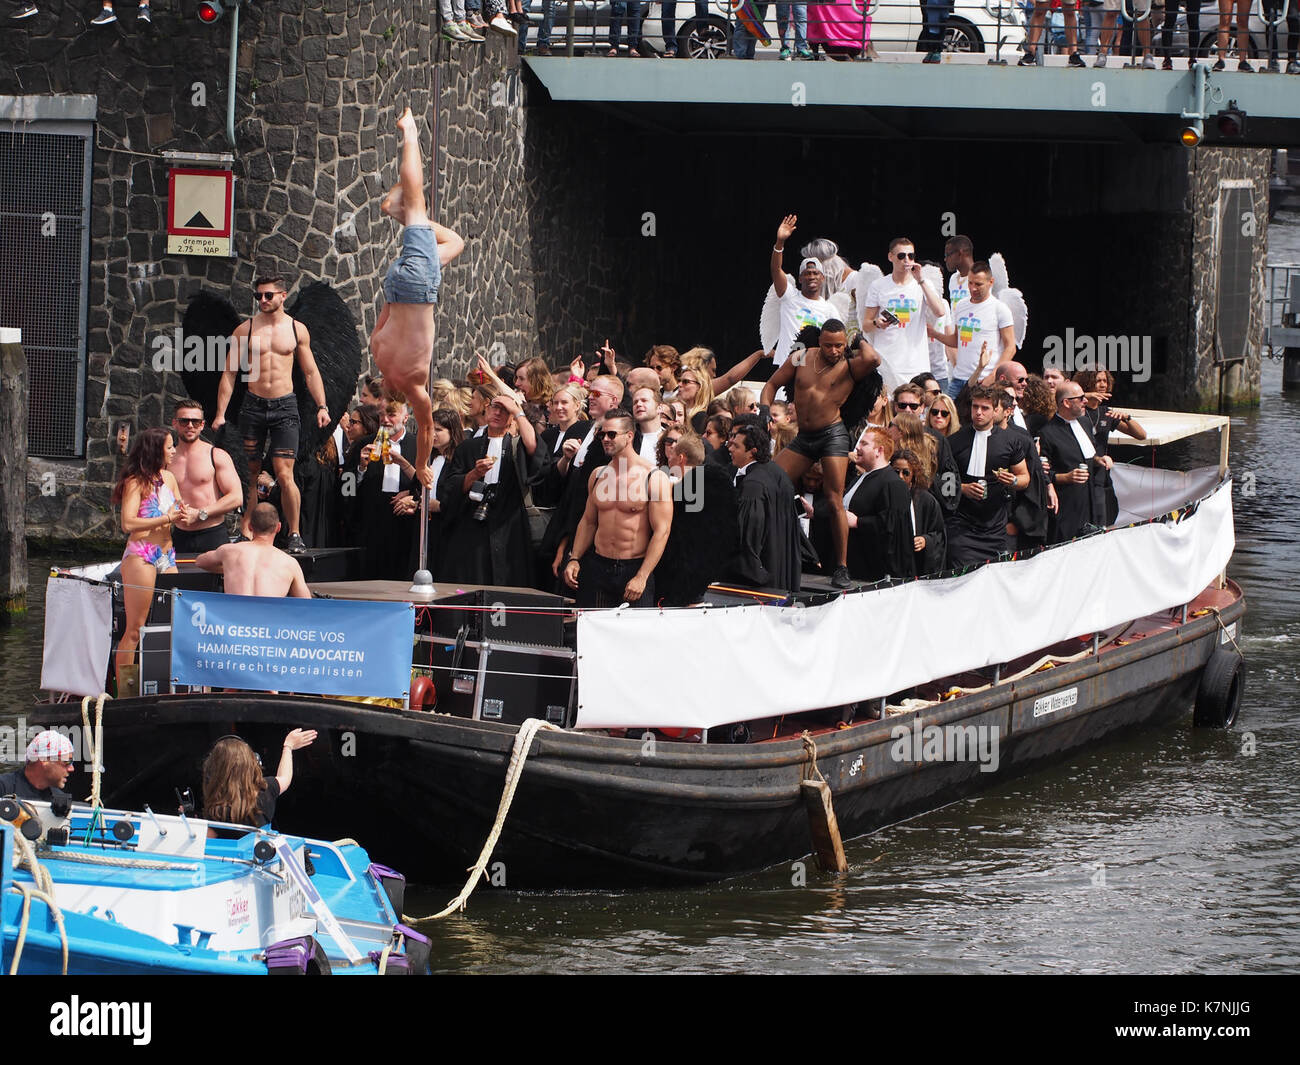 Barco advocaten boot, Canal Parade Amsterdam 2017 Foto 2 Foto de stock